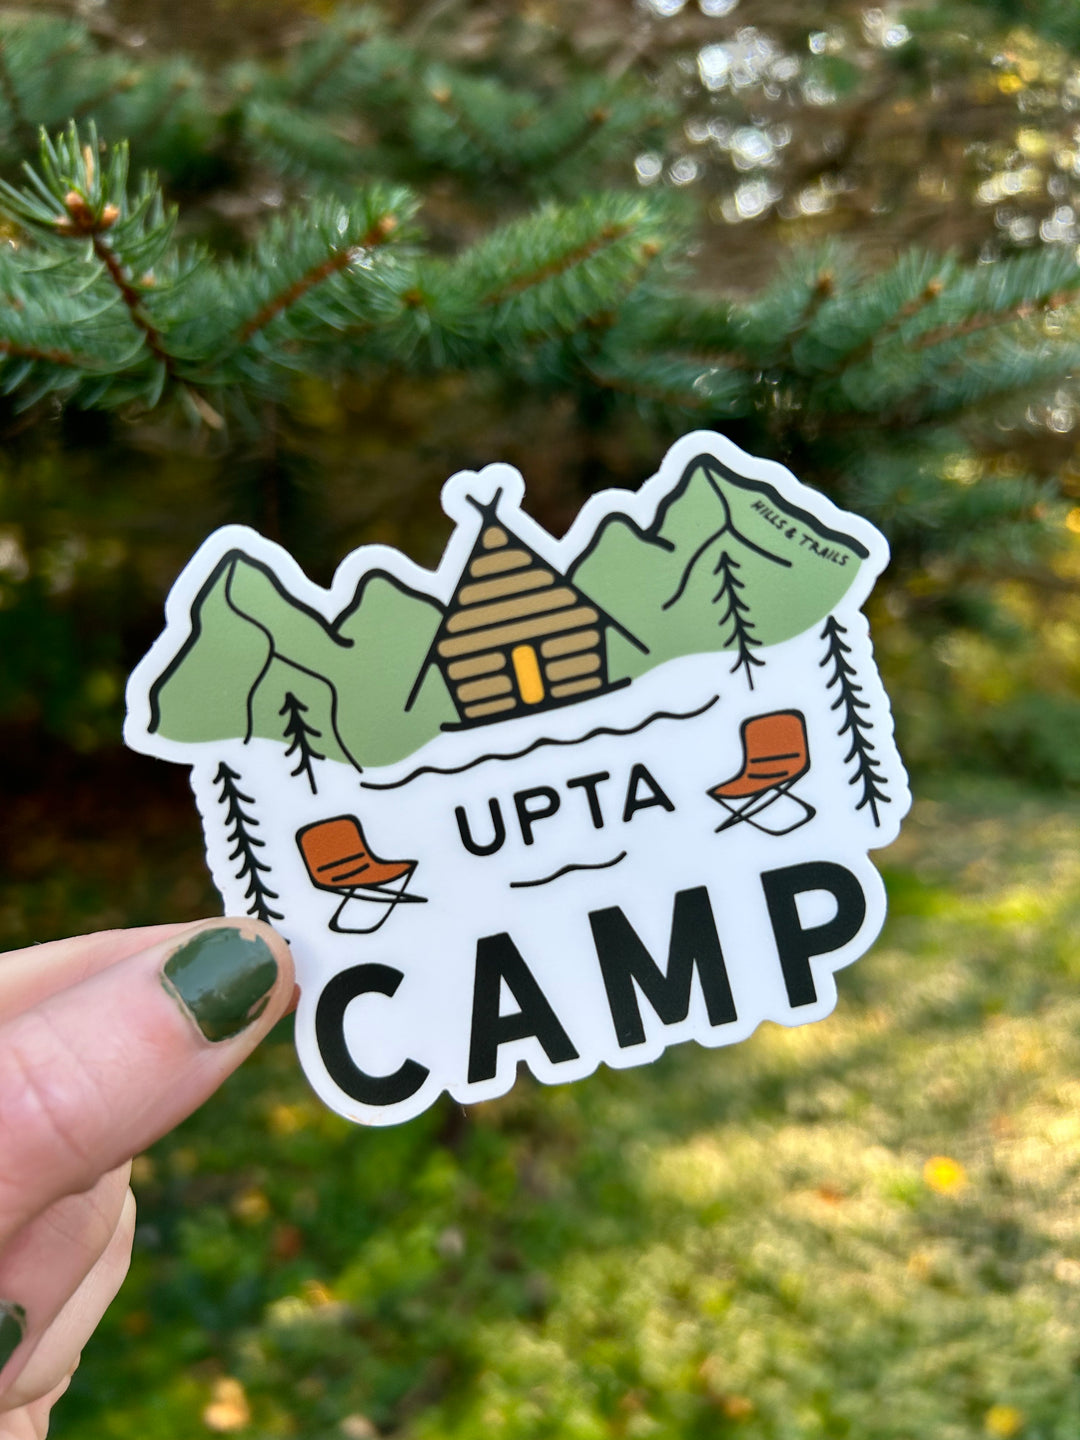 Upta Camp Sticker